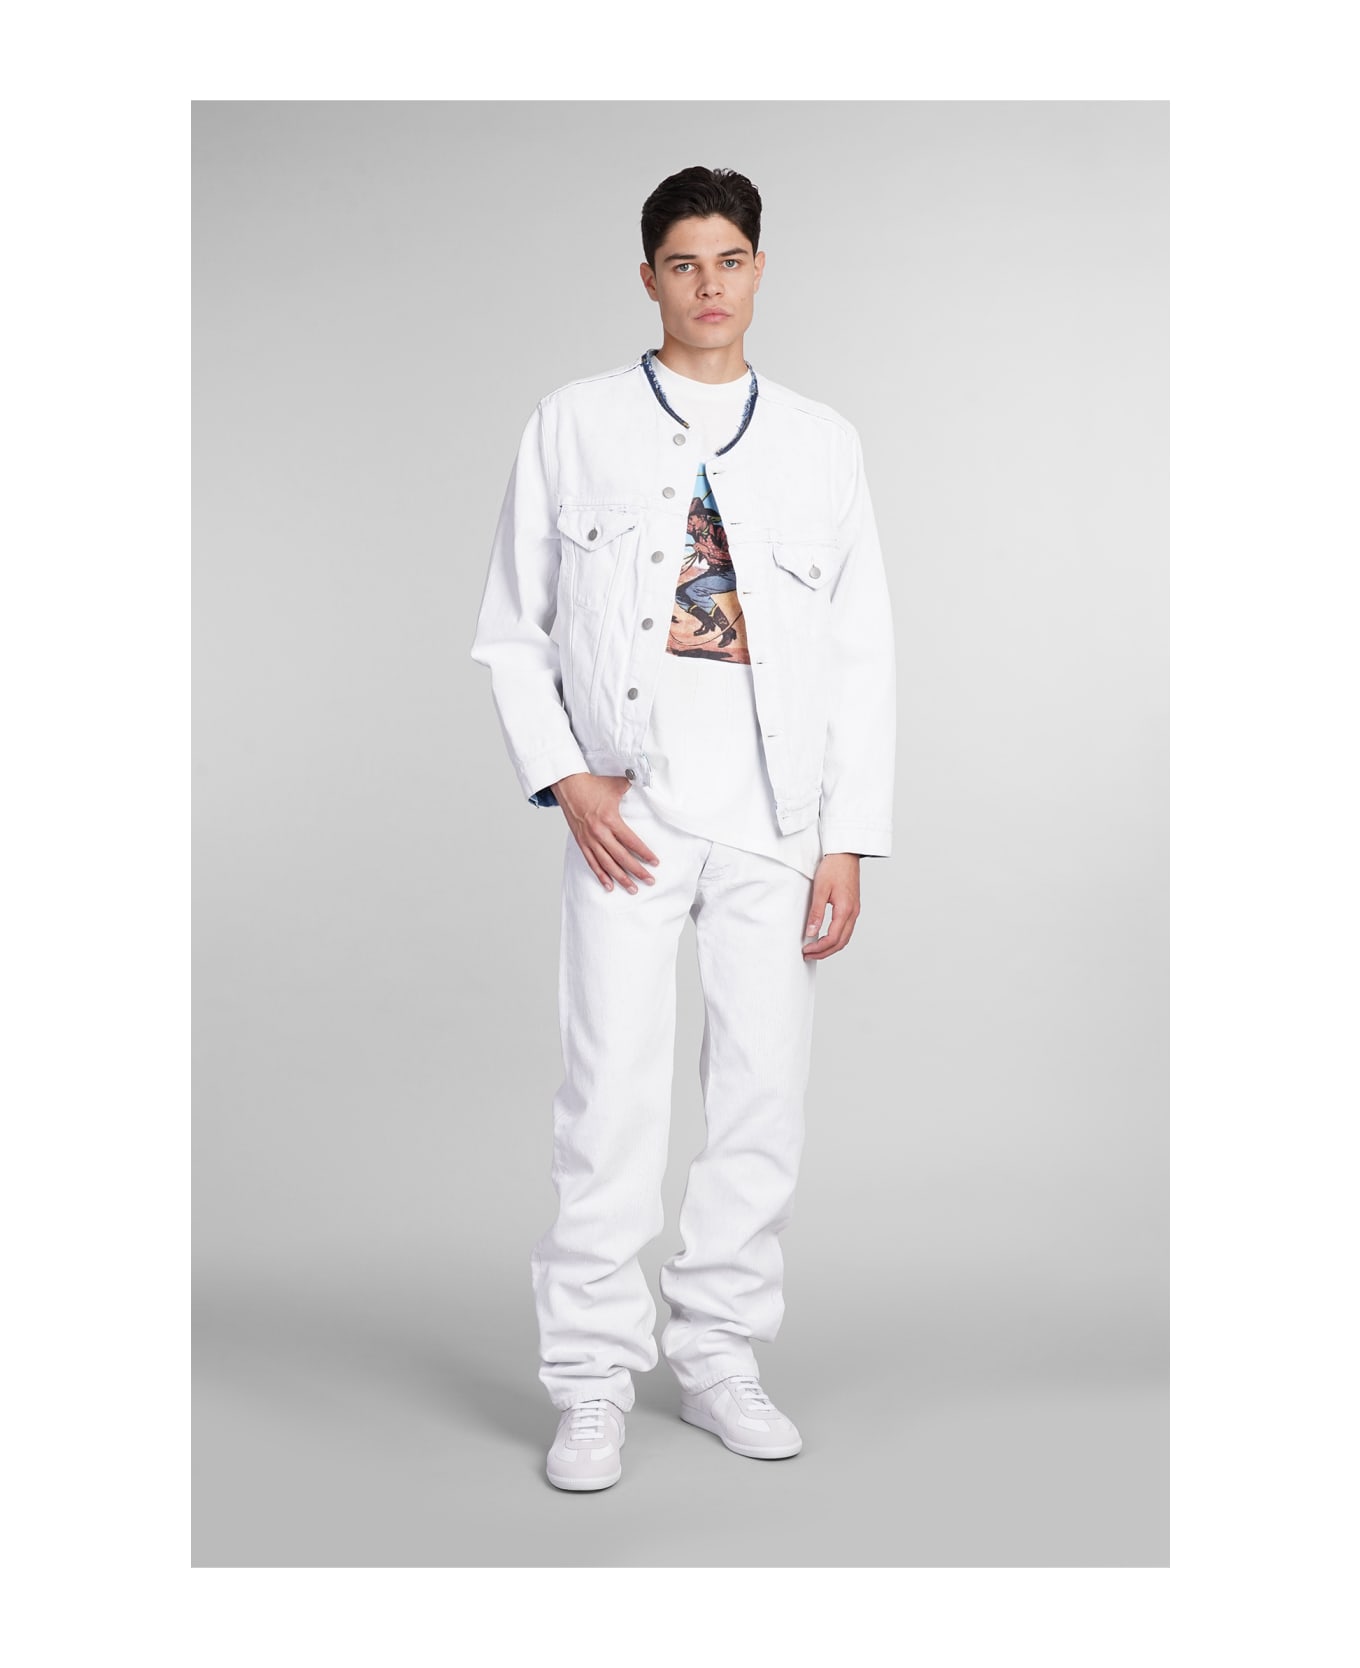 Maison Margiela Jeans In White Denim - white